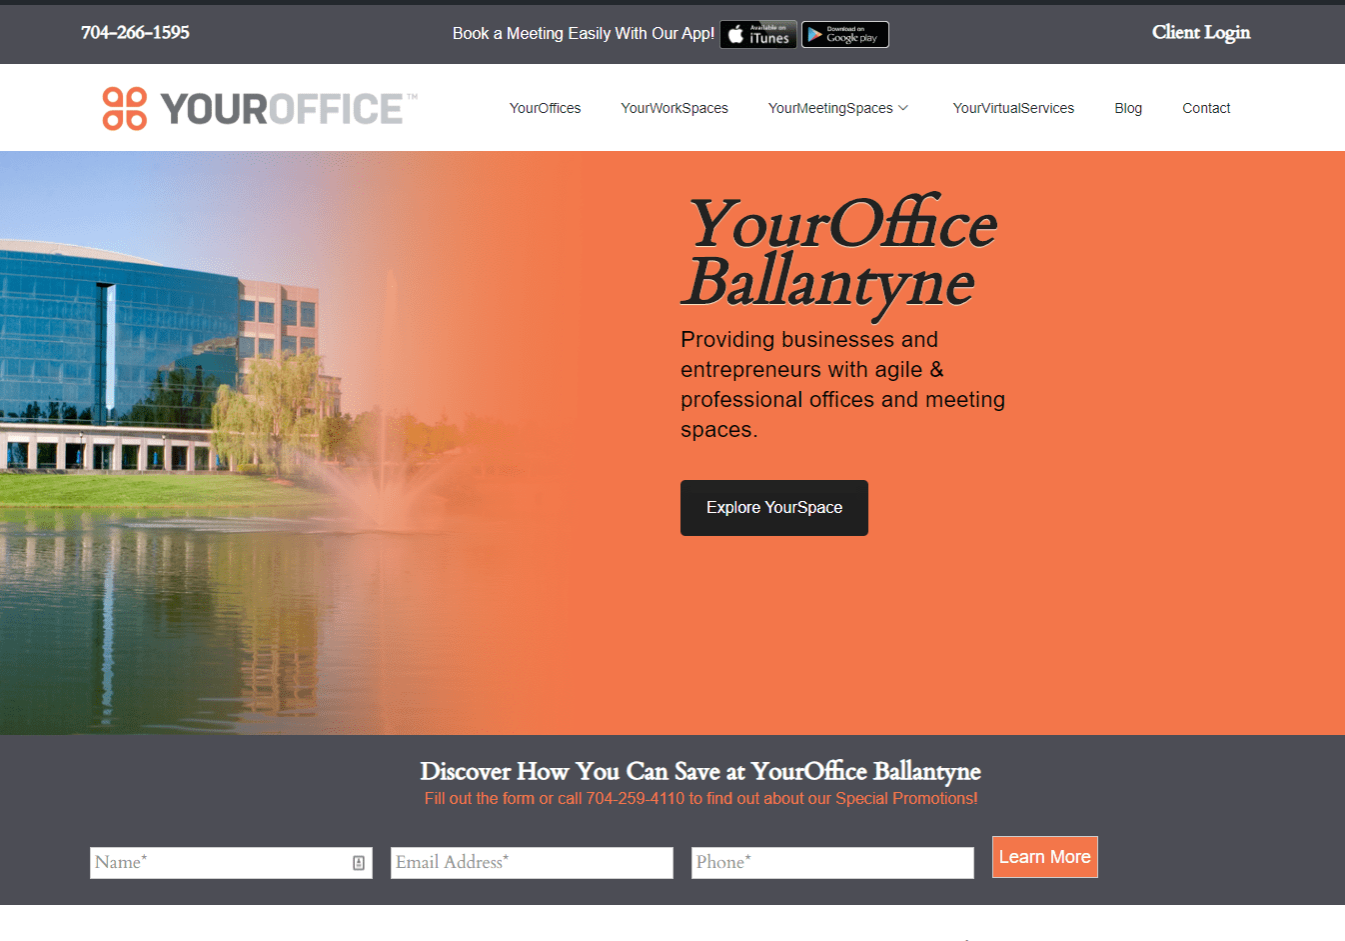 YourOffice Ballantyne DCA White Label Website Build,